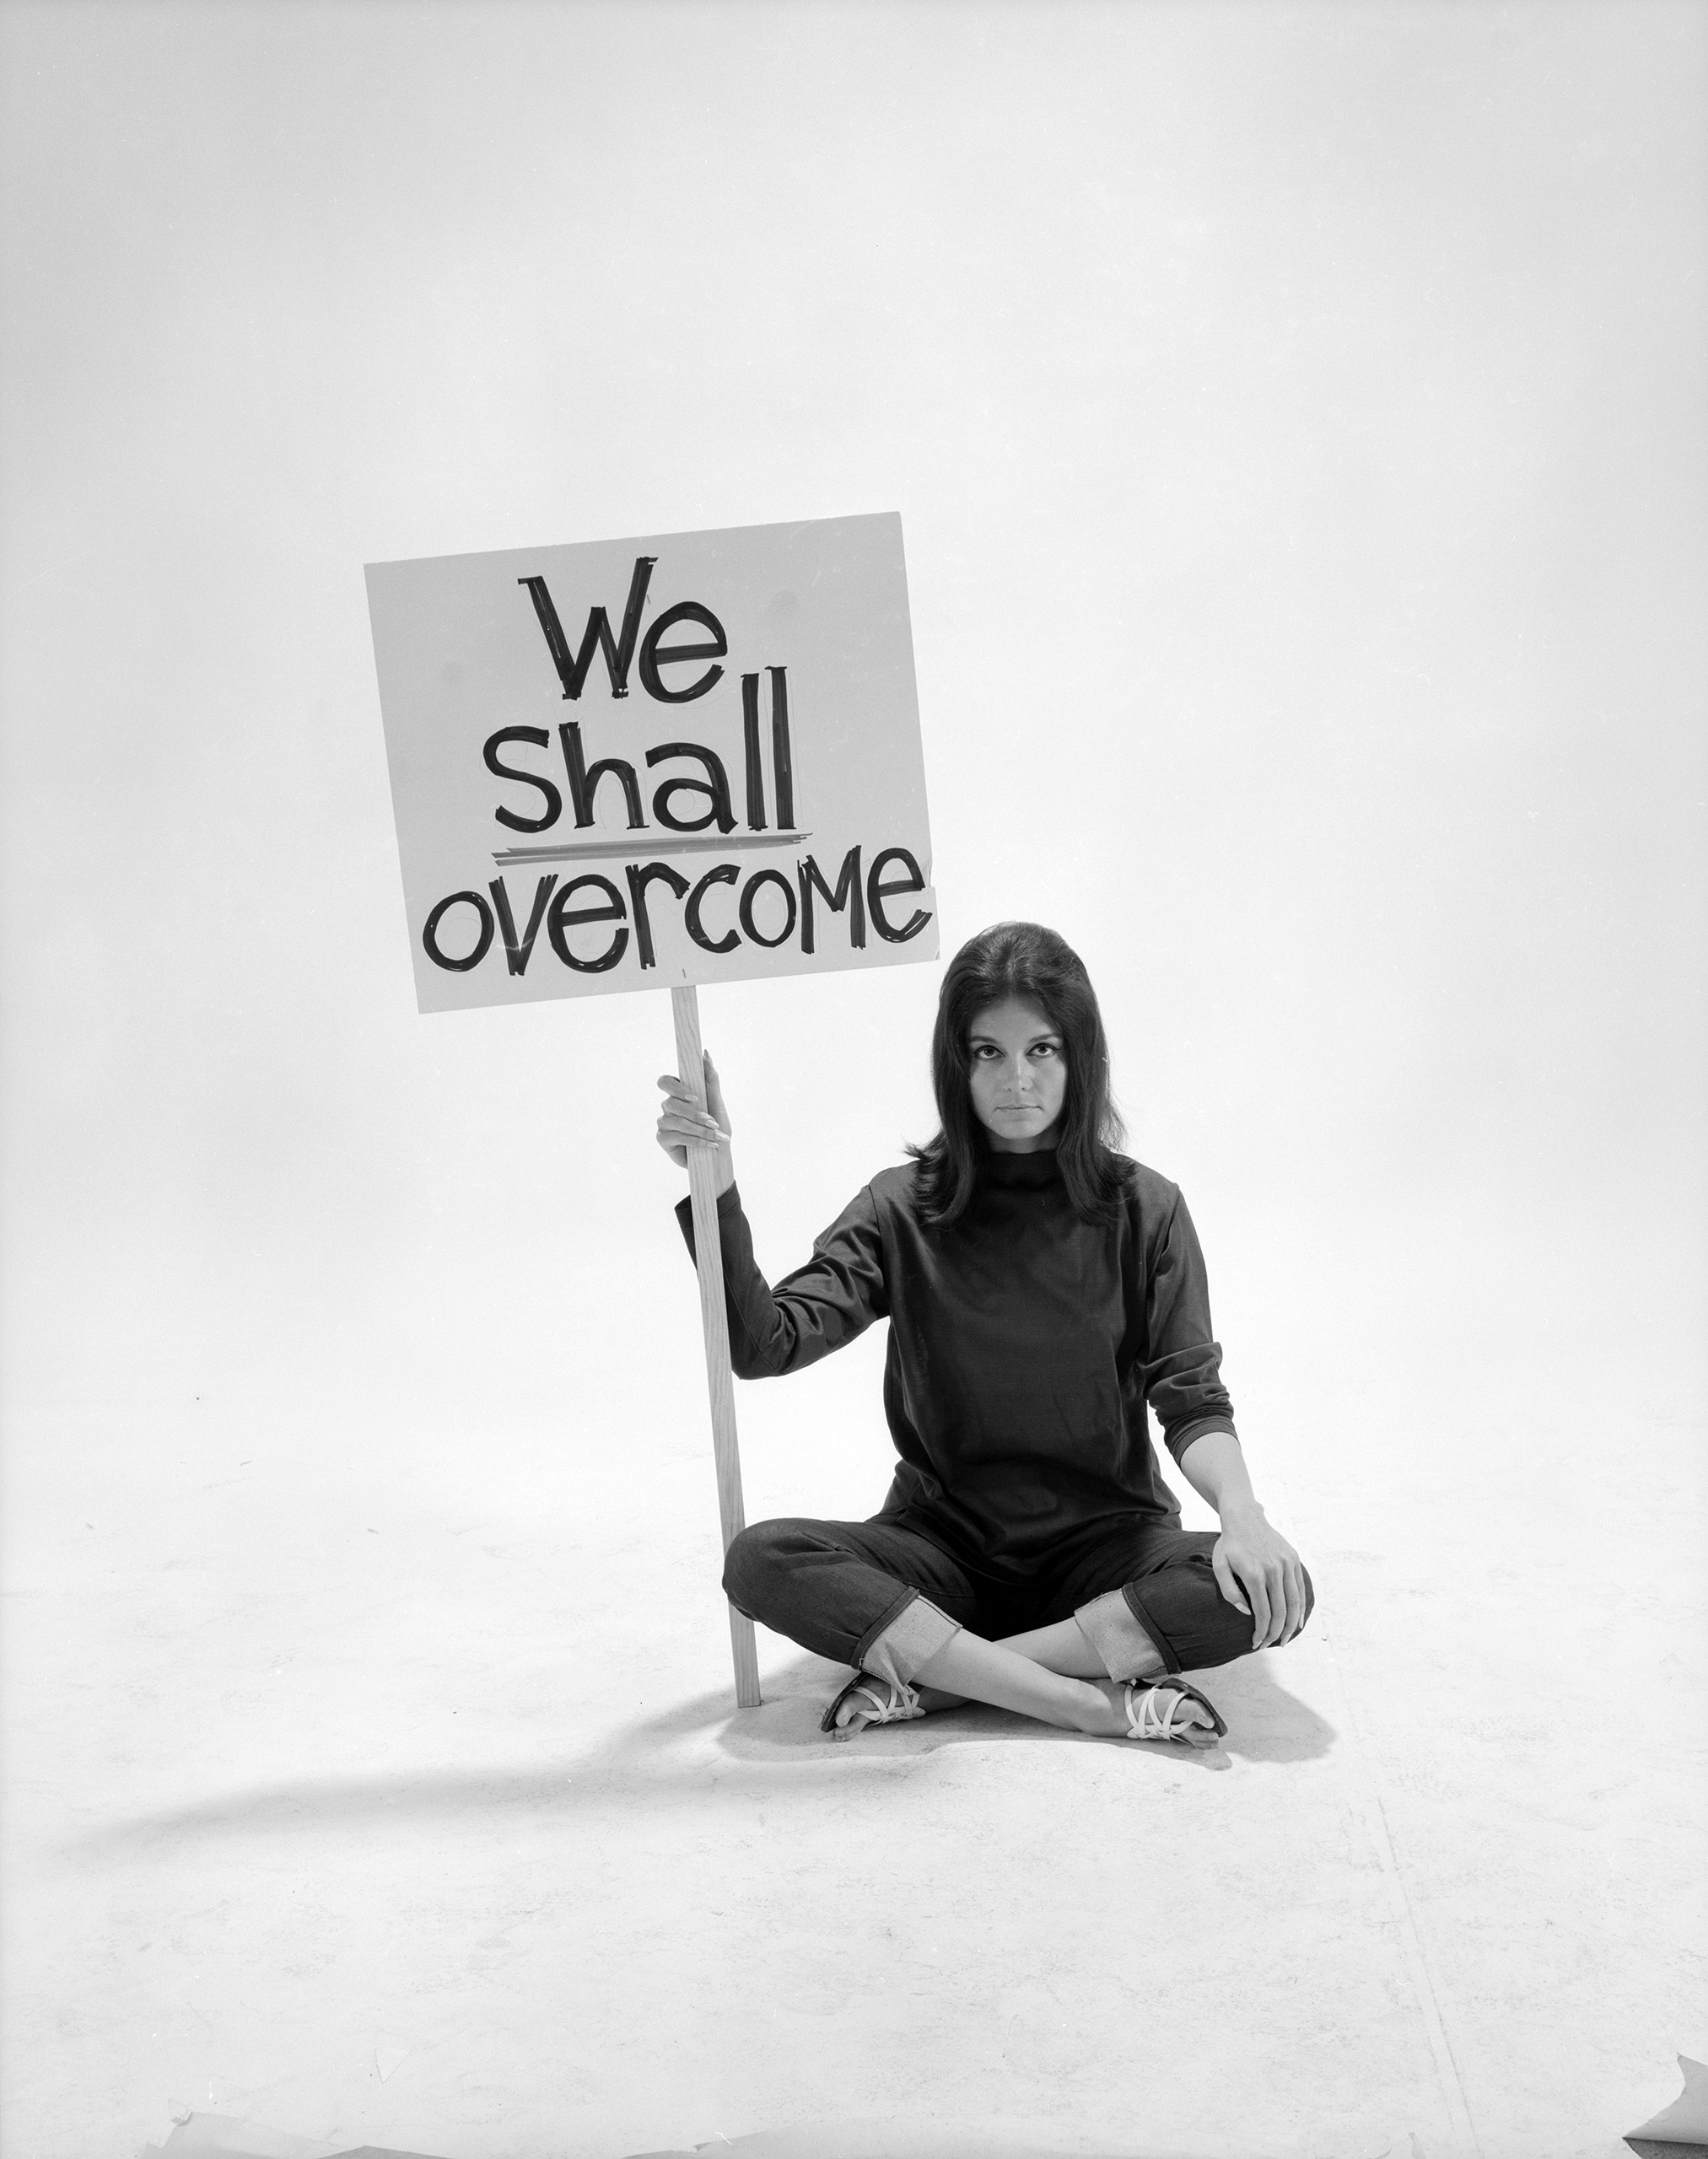 Gloria Steinem in 1965 from LIFE magazine.